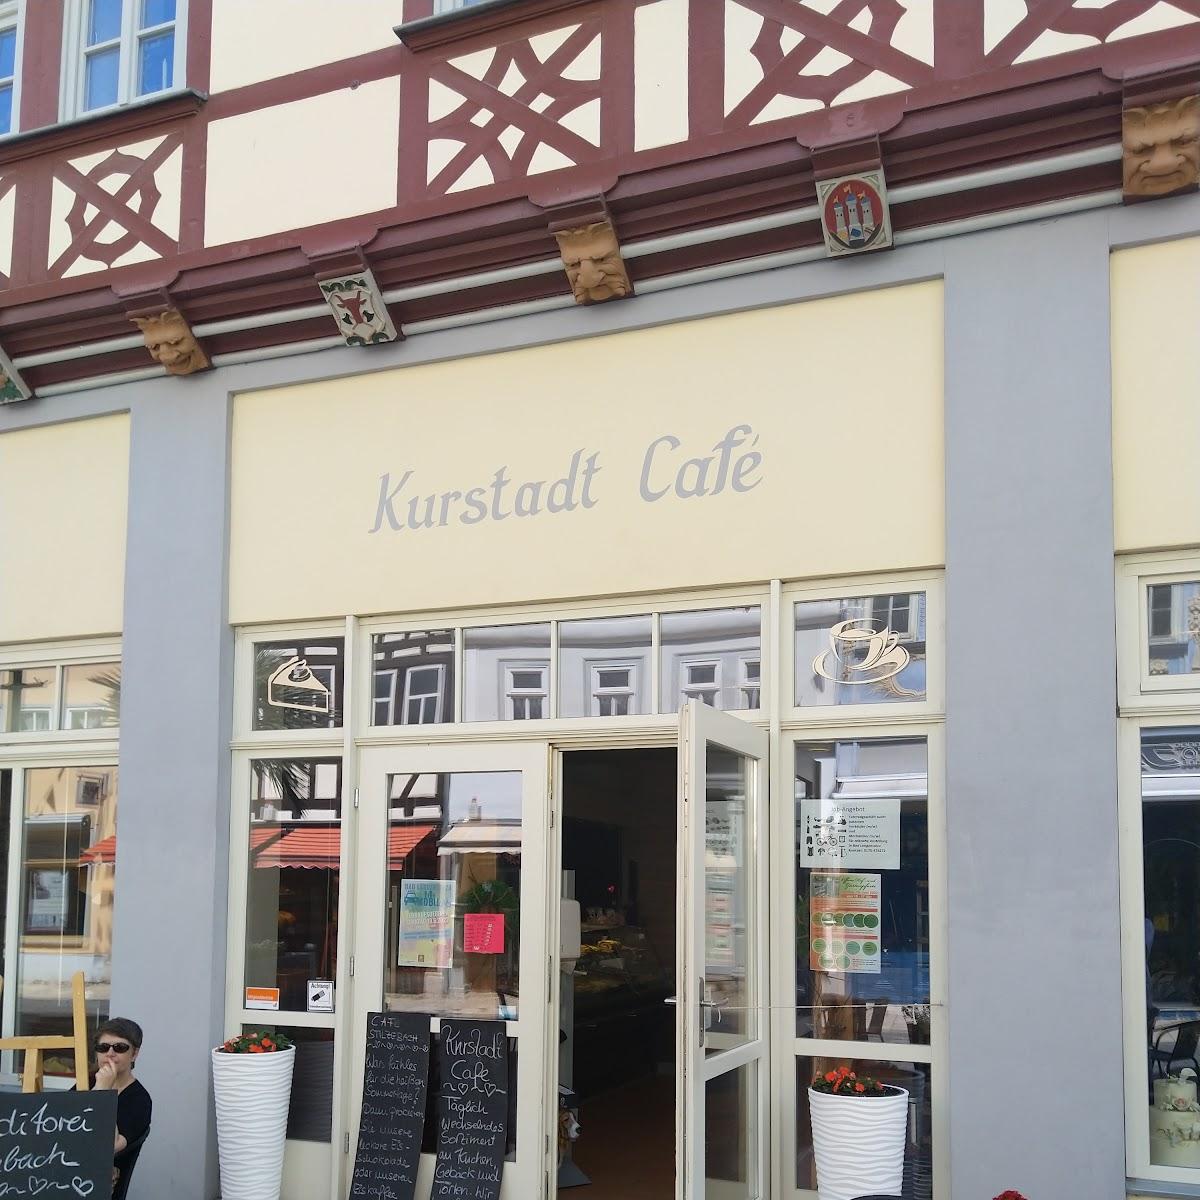 Restaurant "Kurstadt Café" in Bad Langensalza